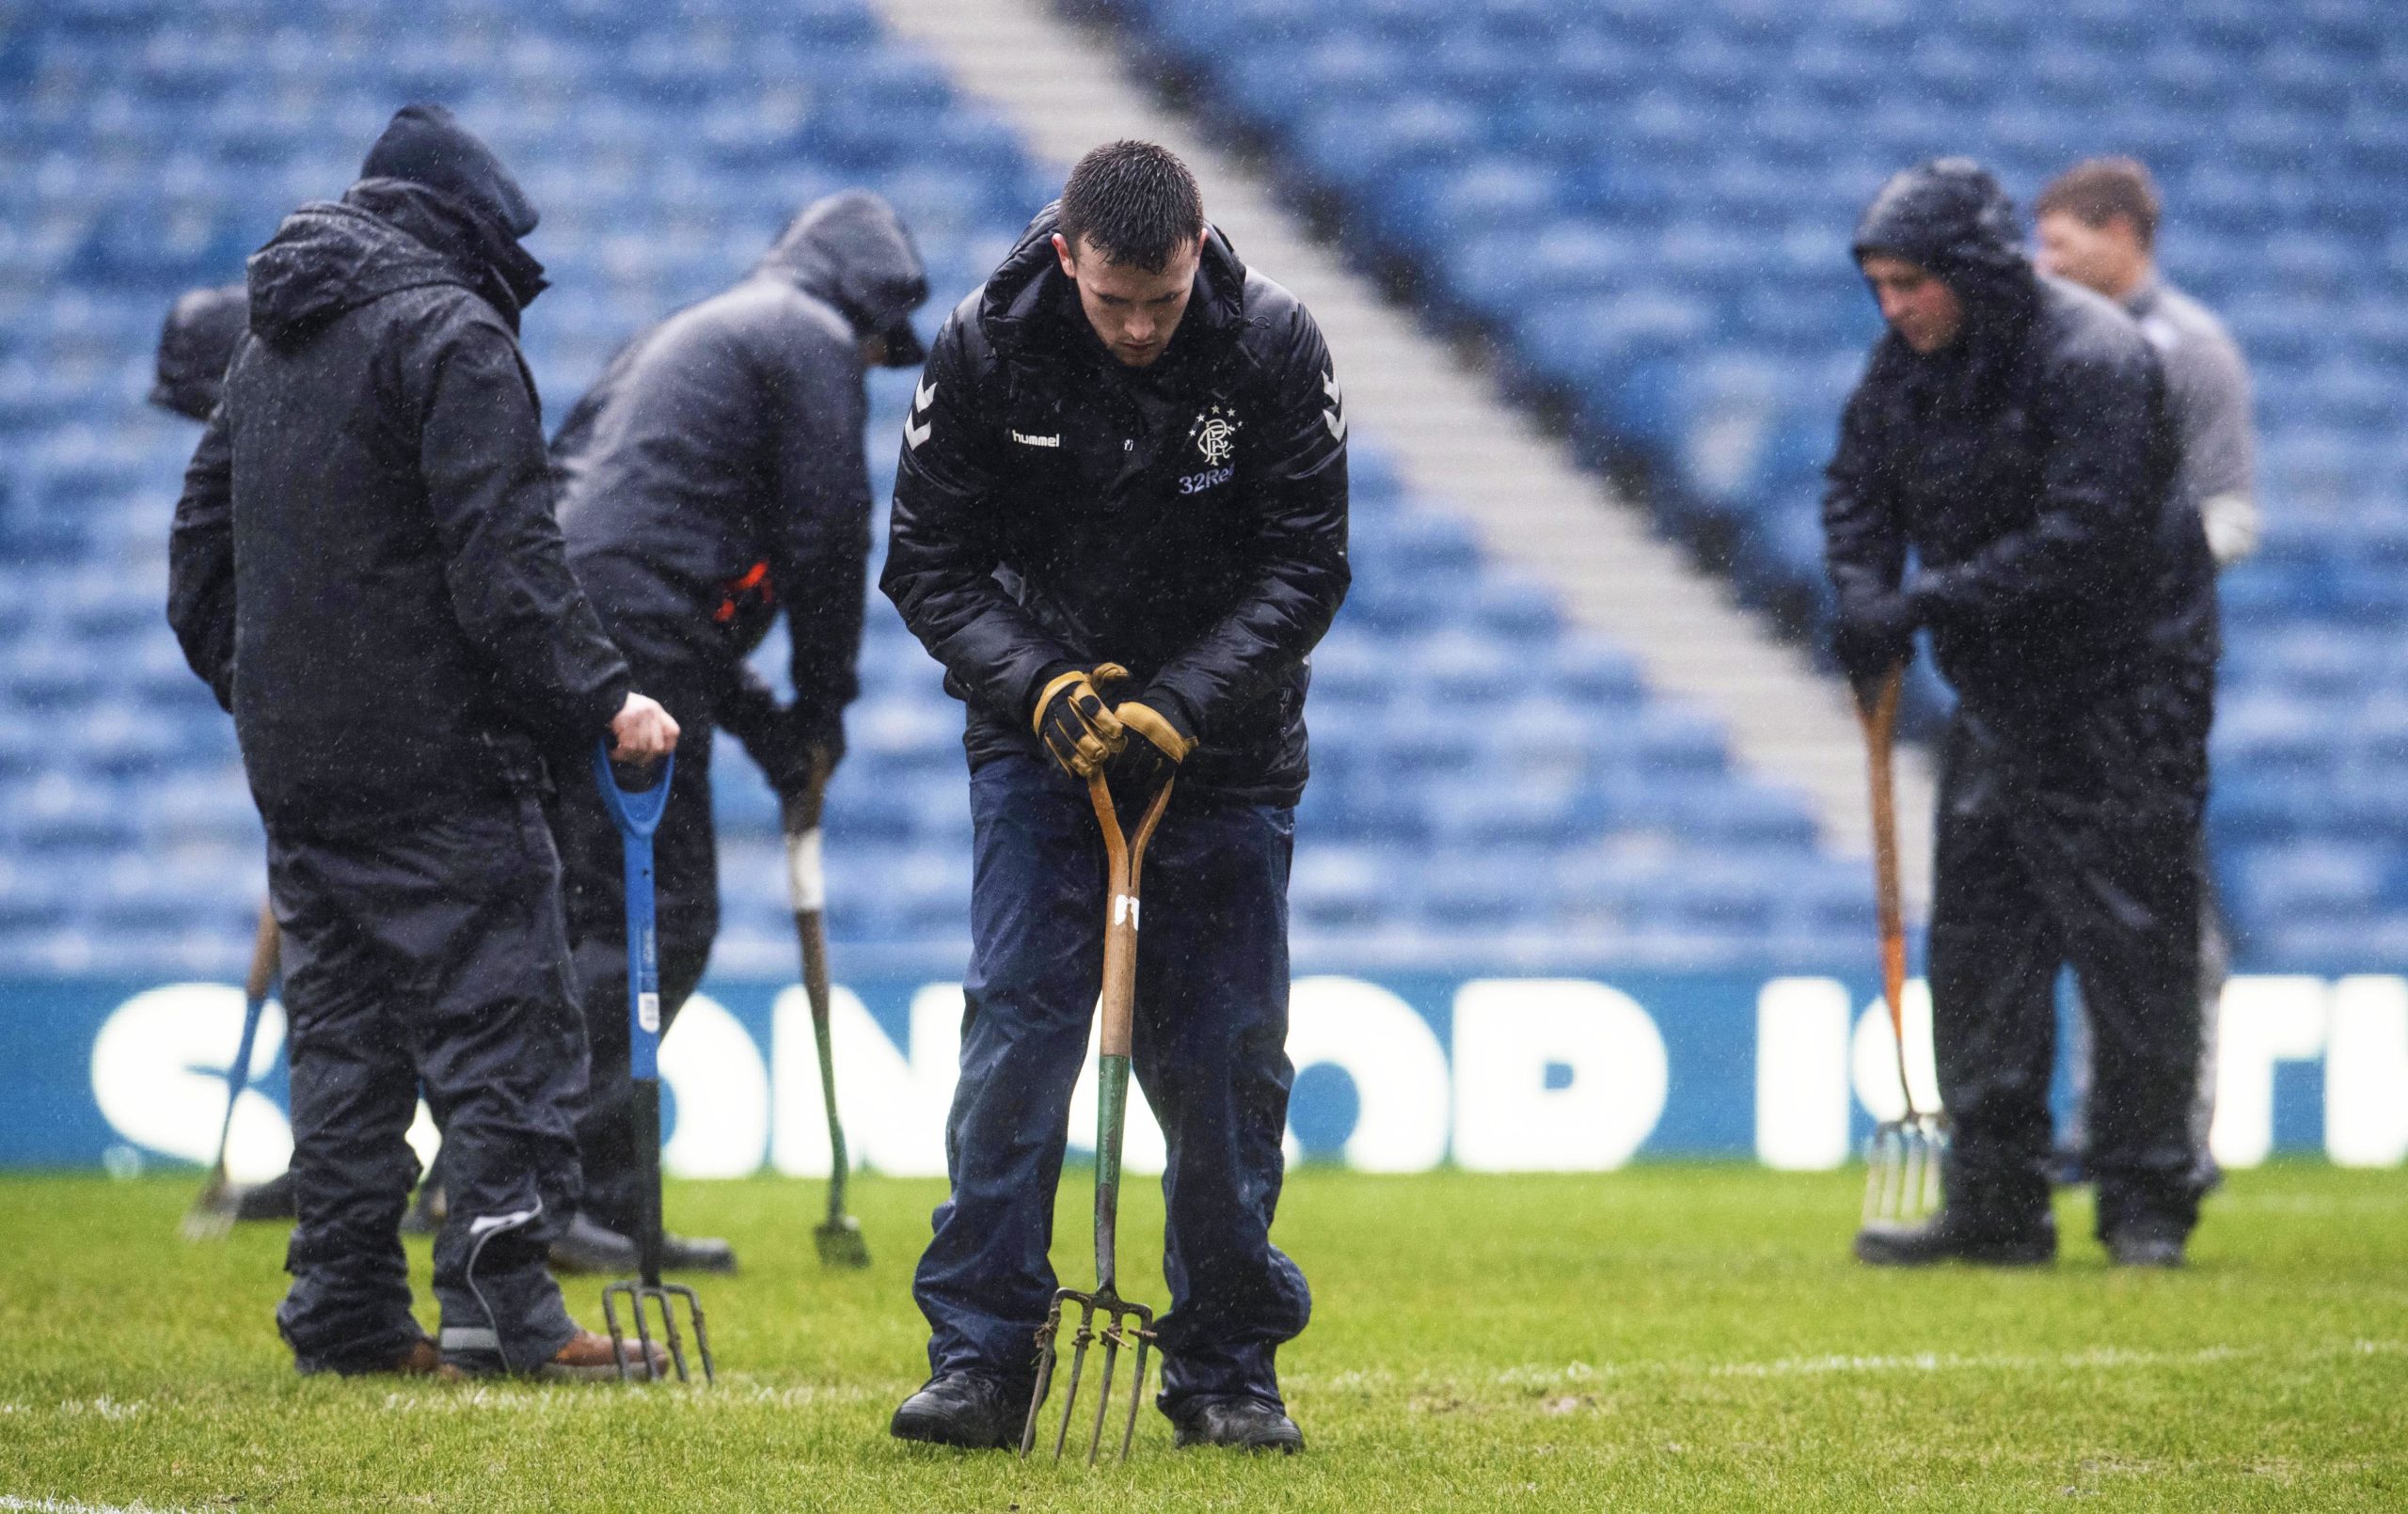 Ground staff tend to the waterlogged Ibrox pitch